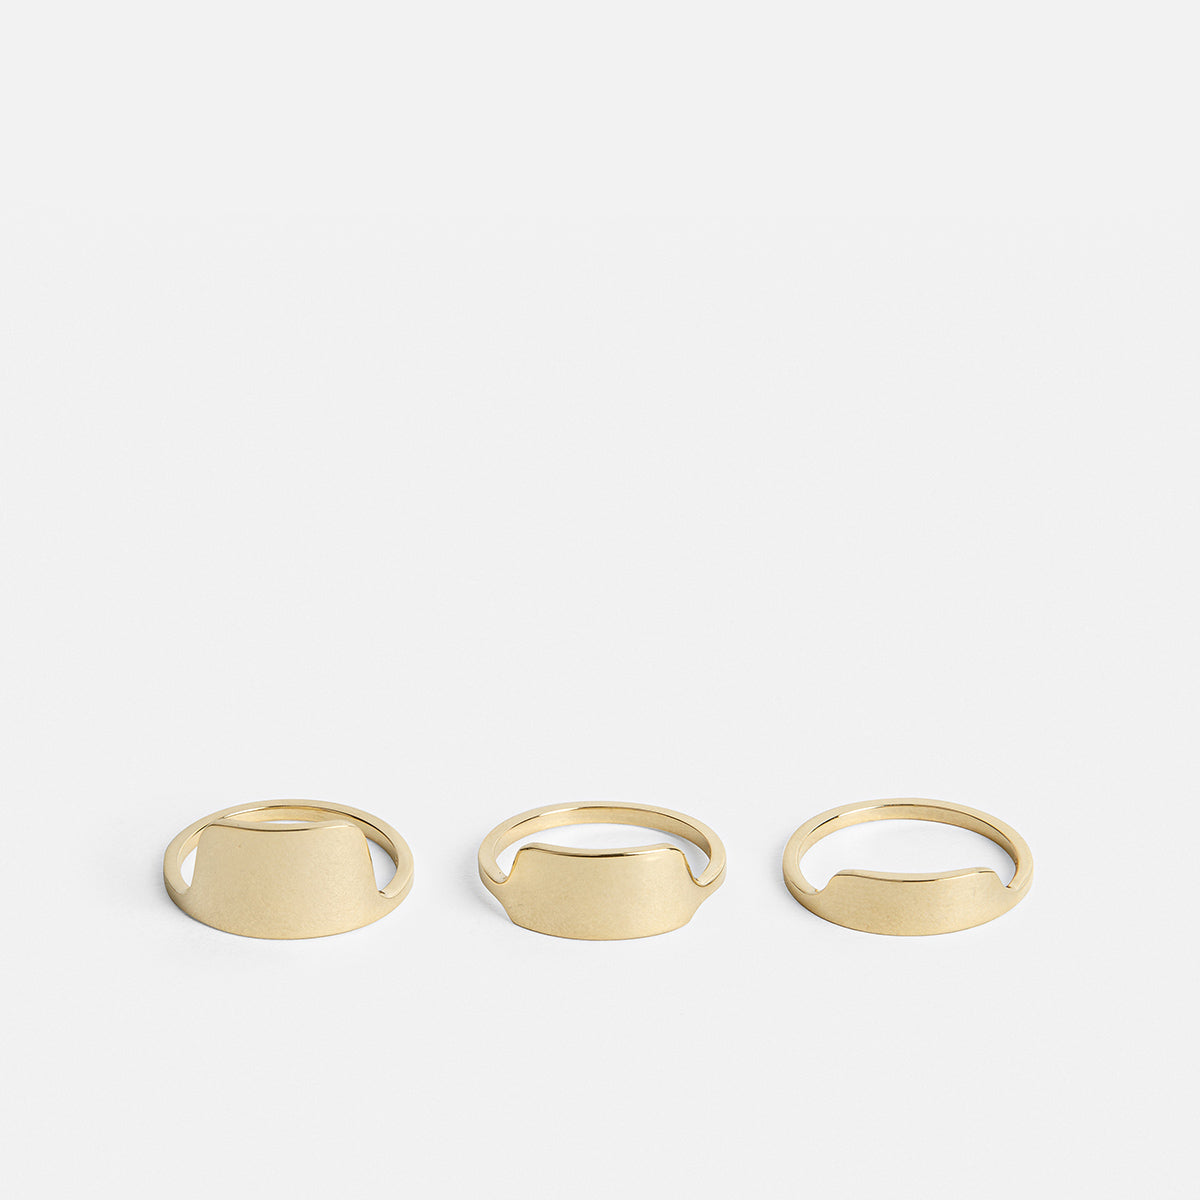 Tylu Alternative Ring in 14k Gold By SHW Fine Jewelry New York City